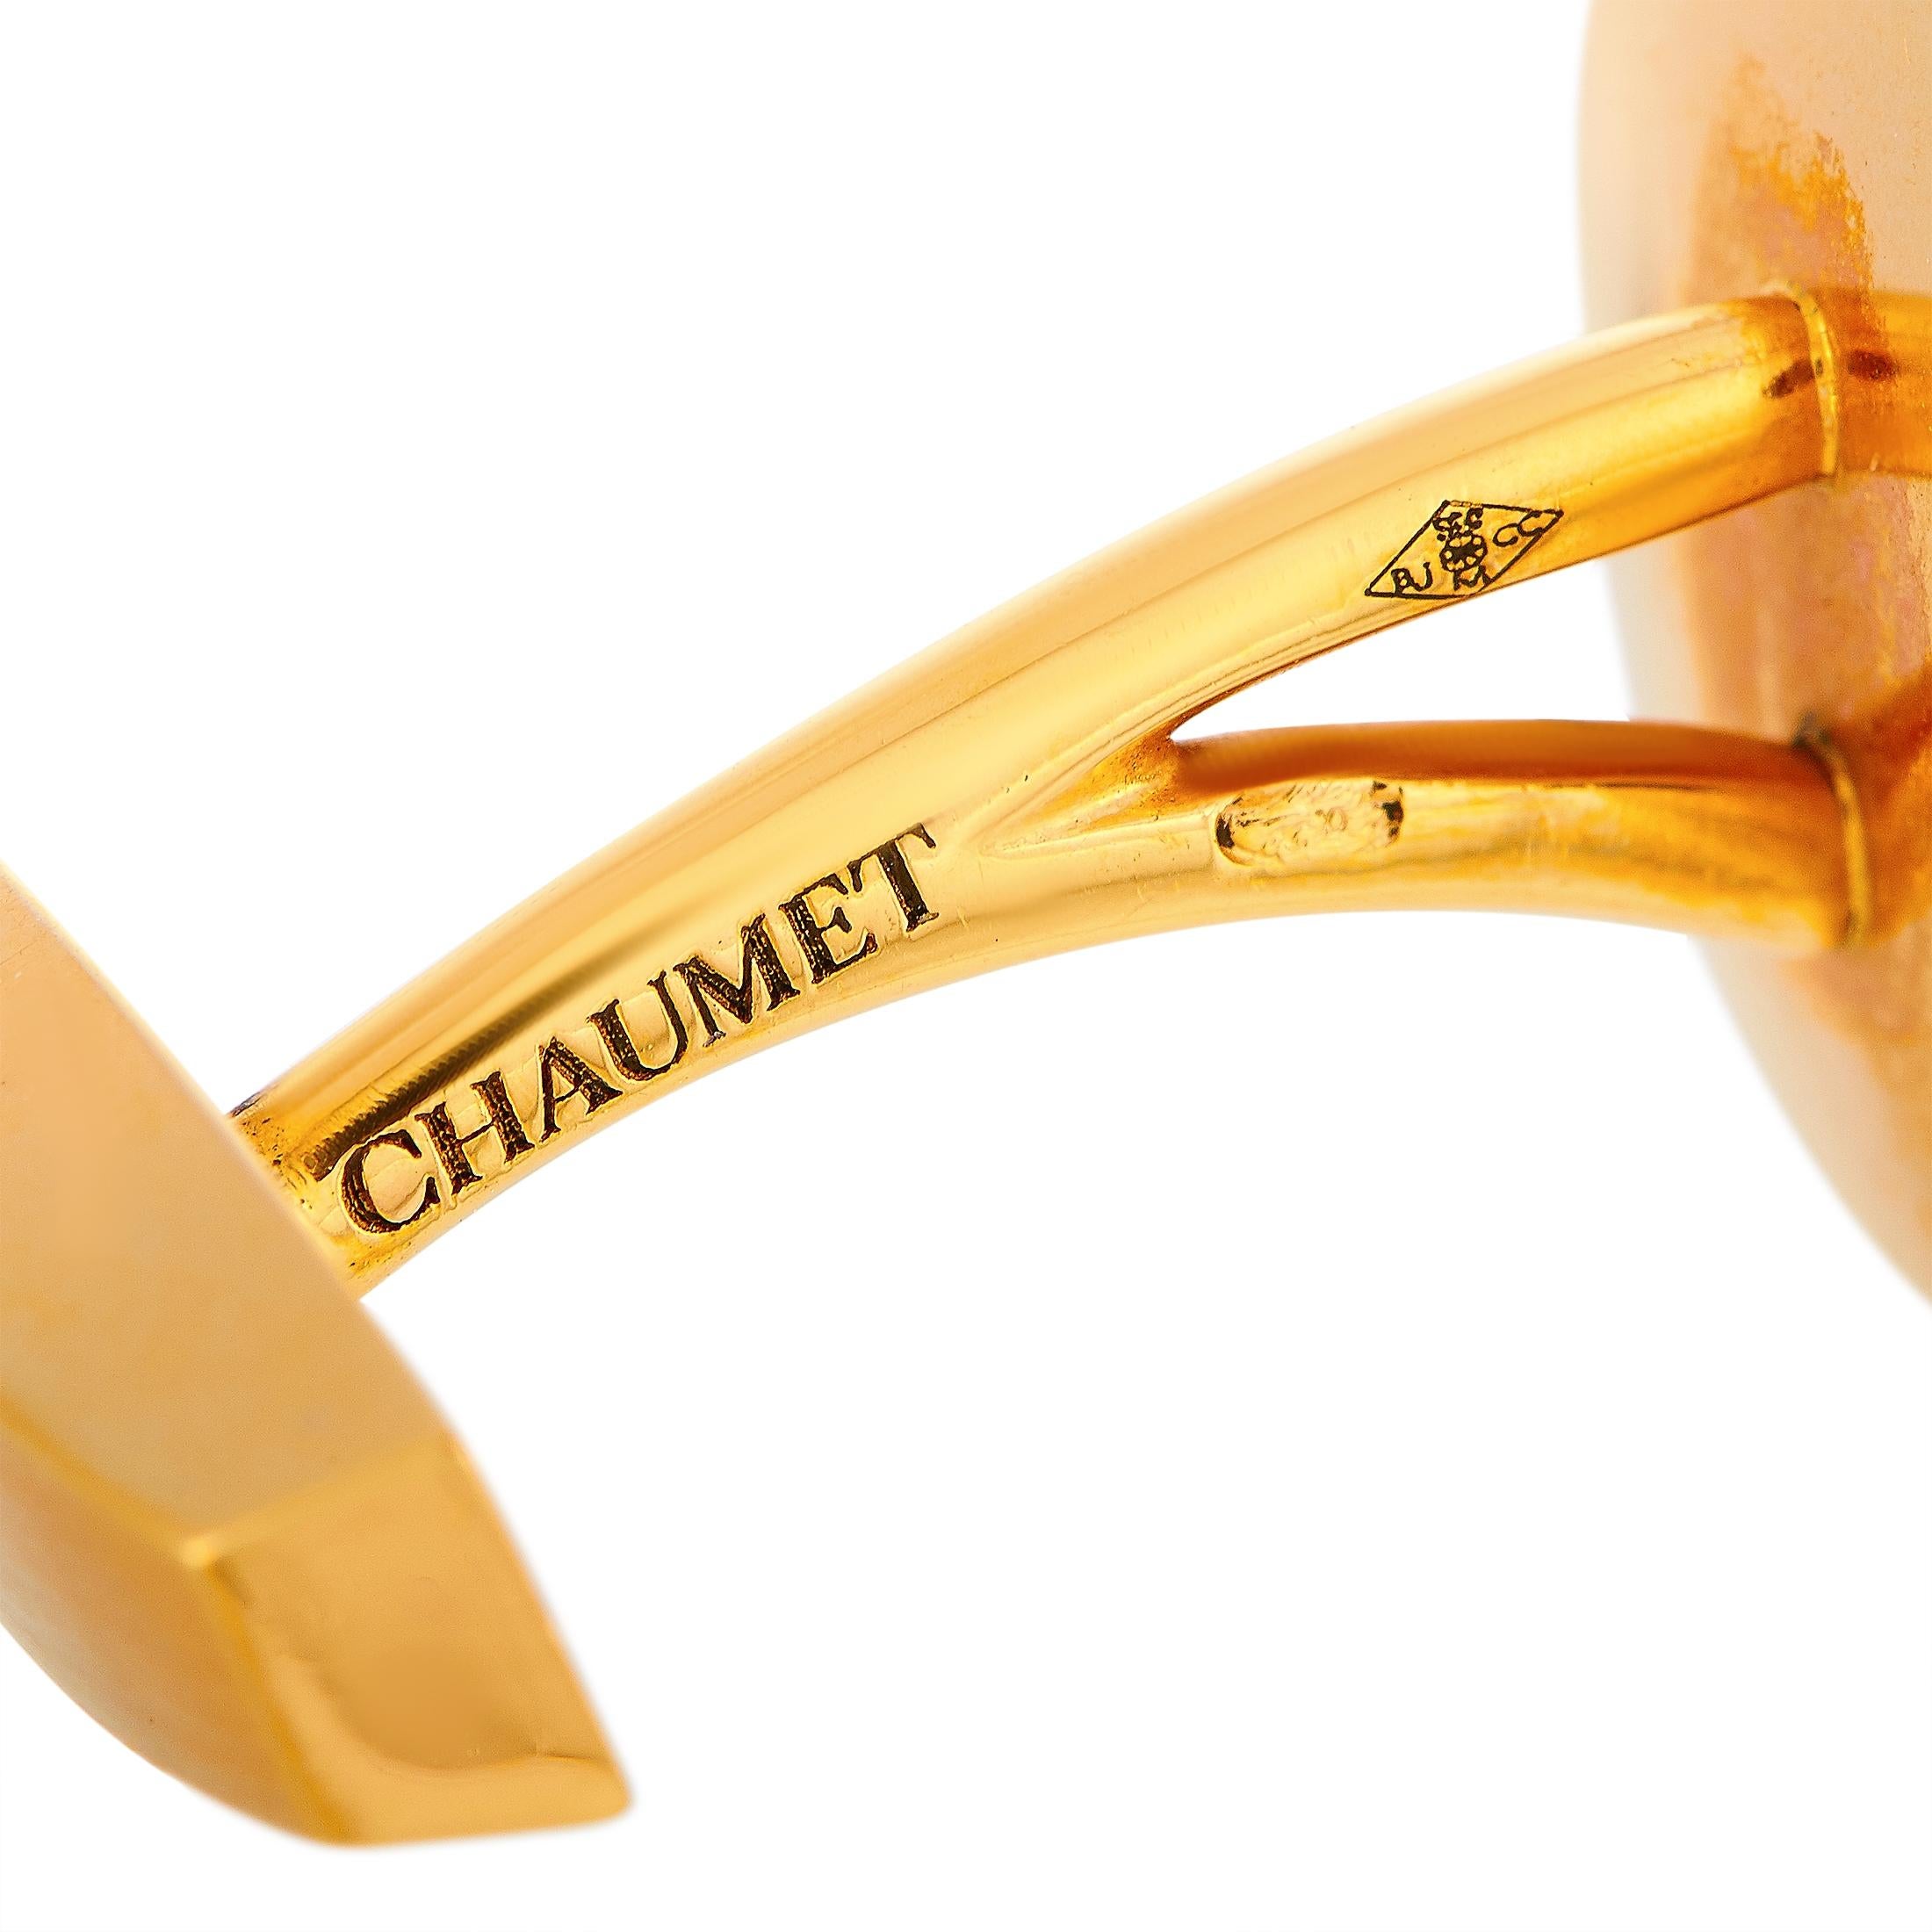 Chaumet 18 Karat Rose Gold and Onyx Cufflinks 1